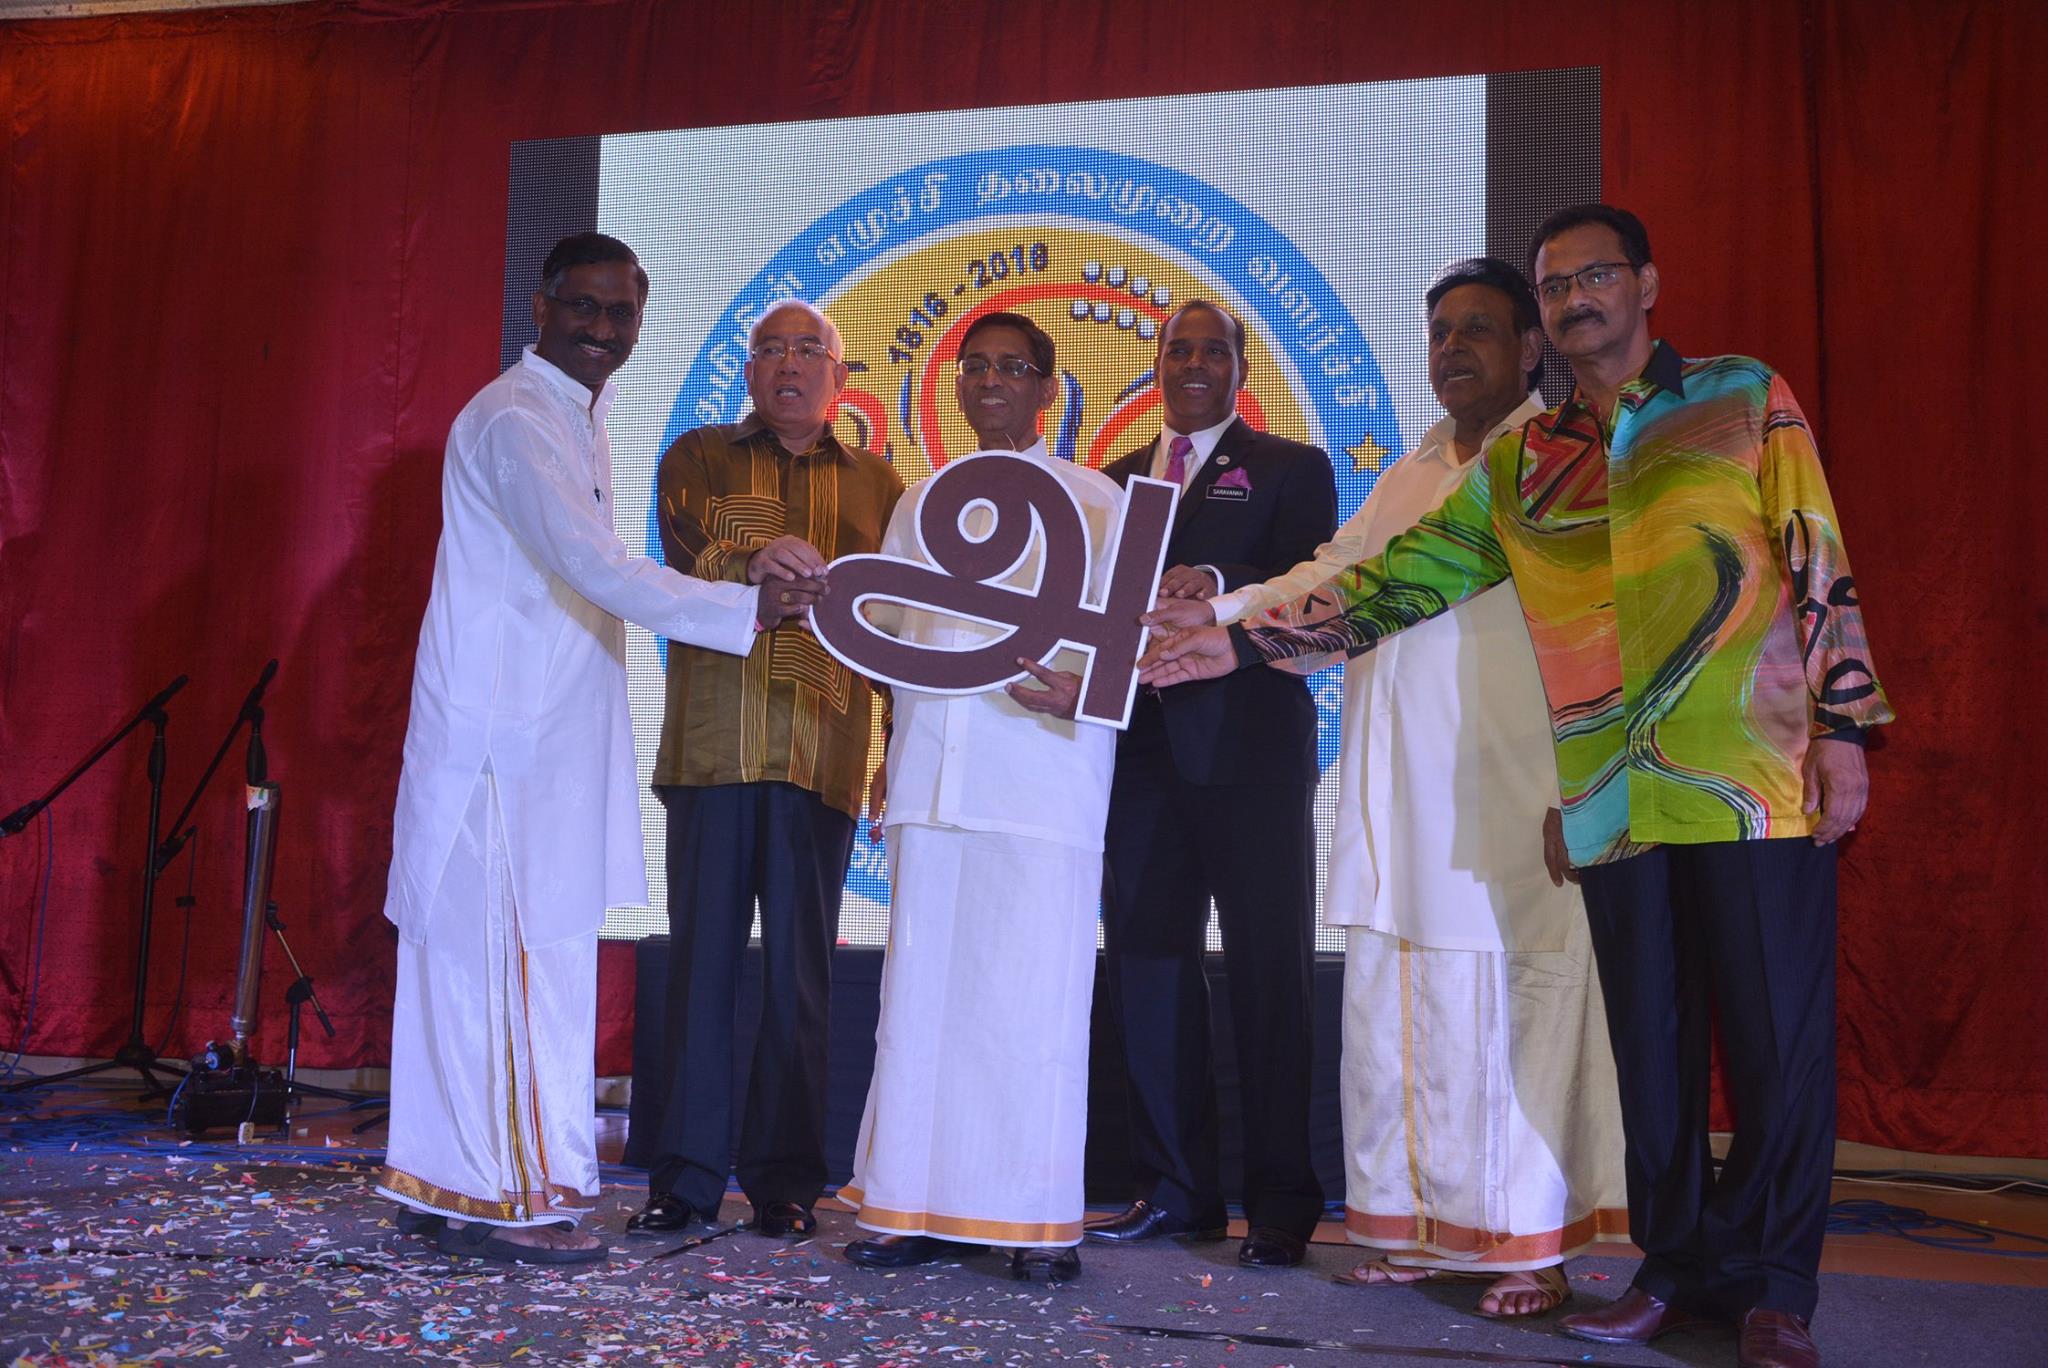 6b/60/celebrating-200-years-of-tamil-education-in-kuala-lumpur.jpg